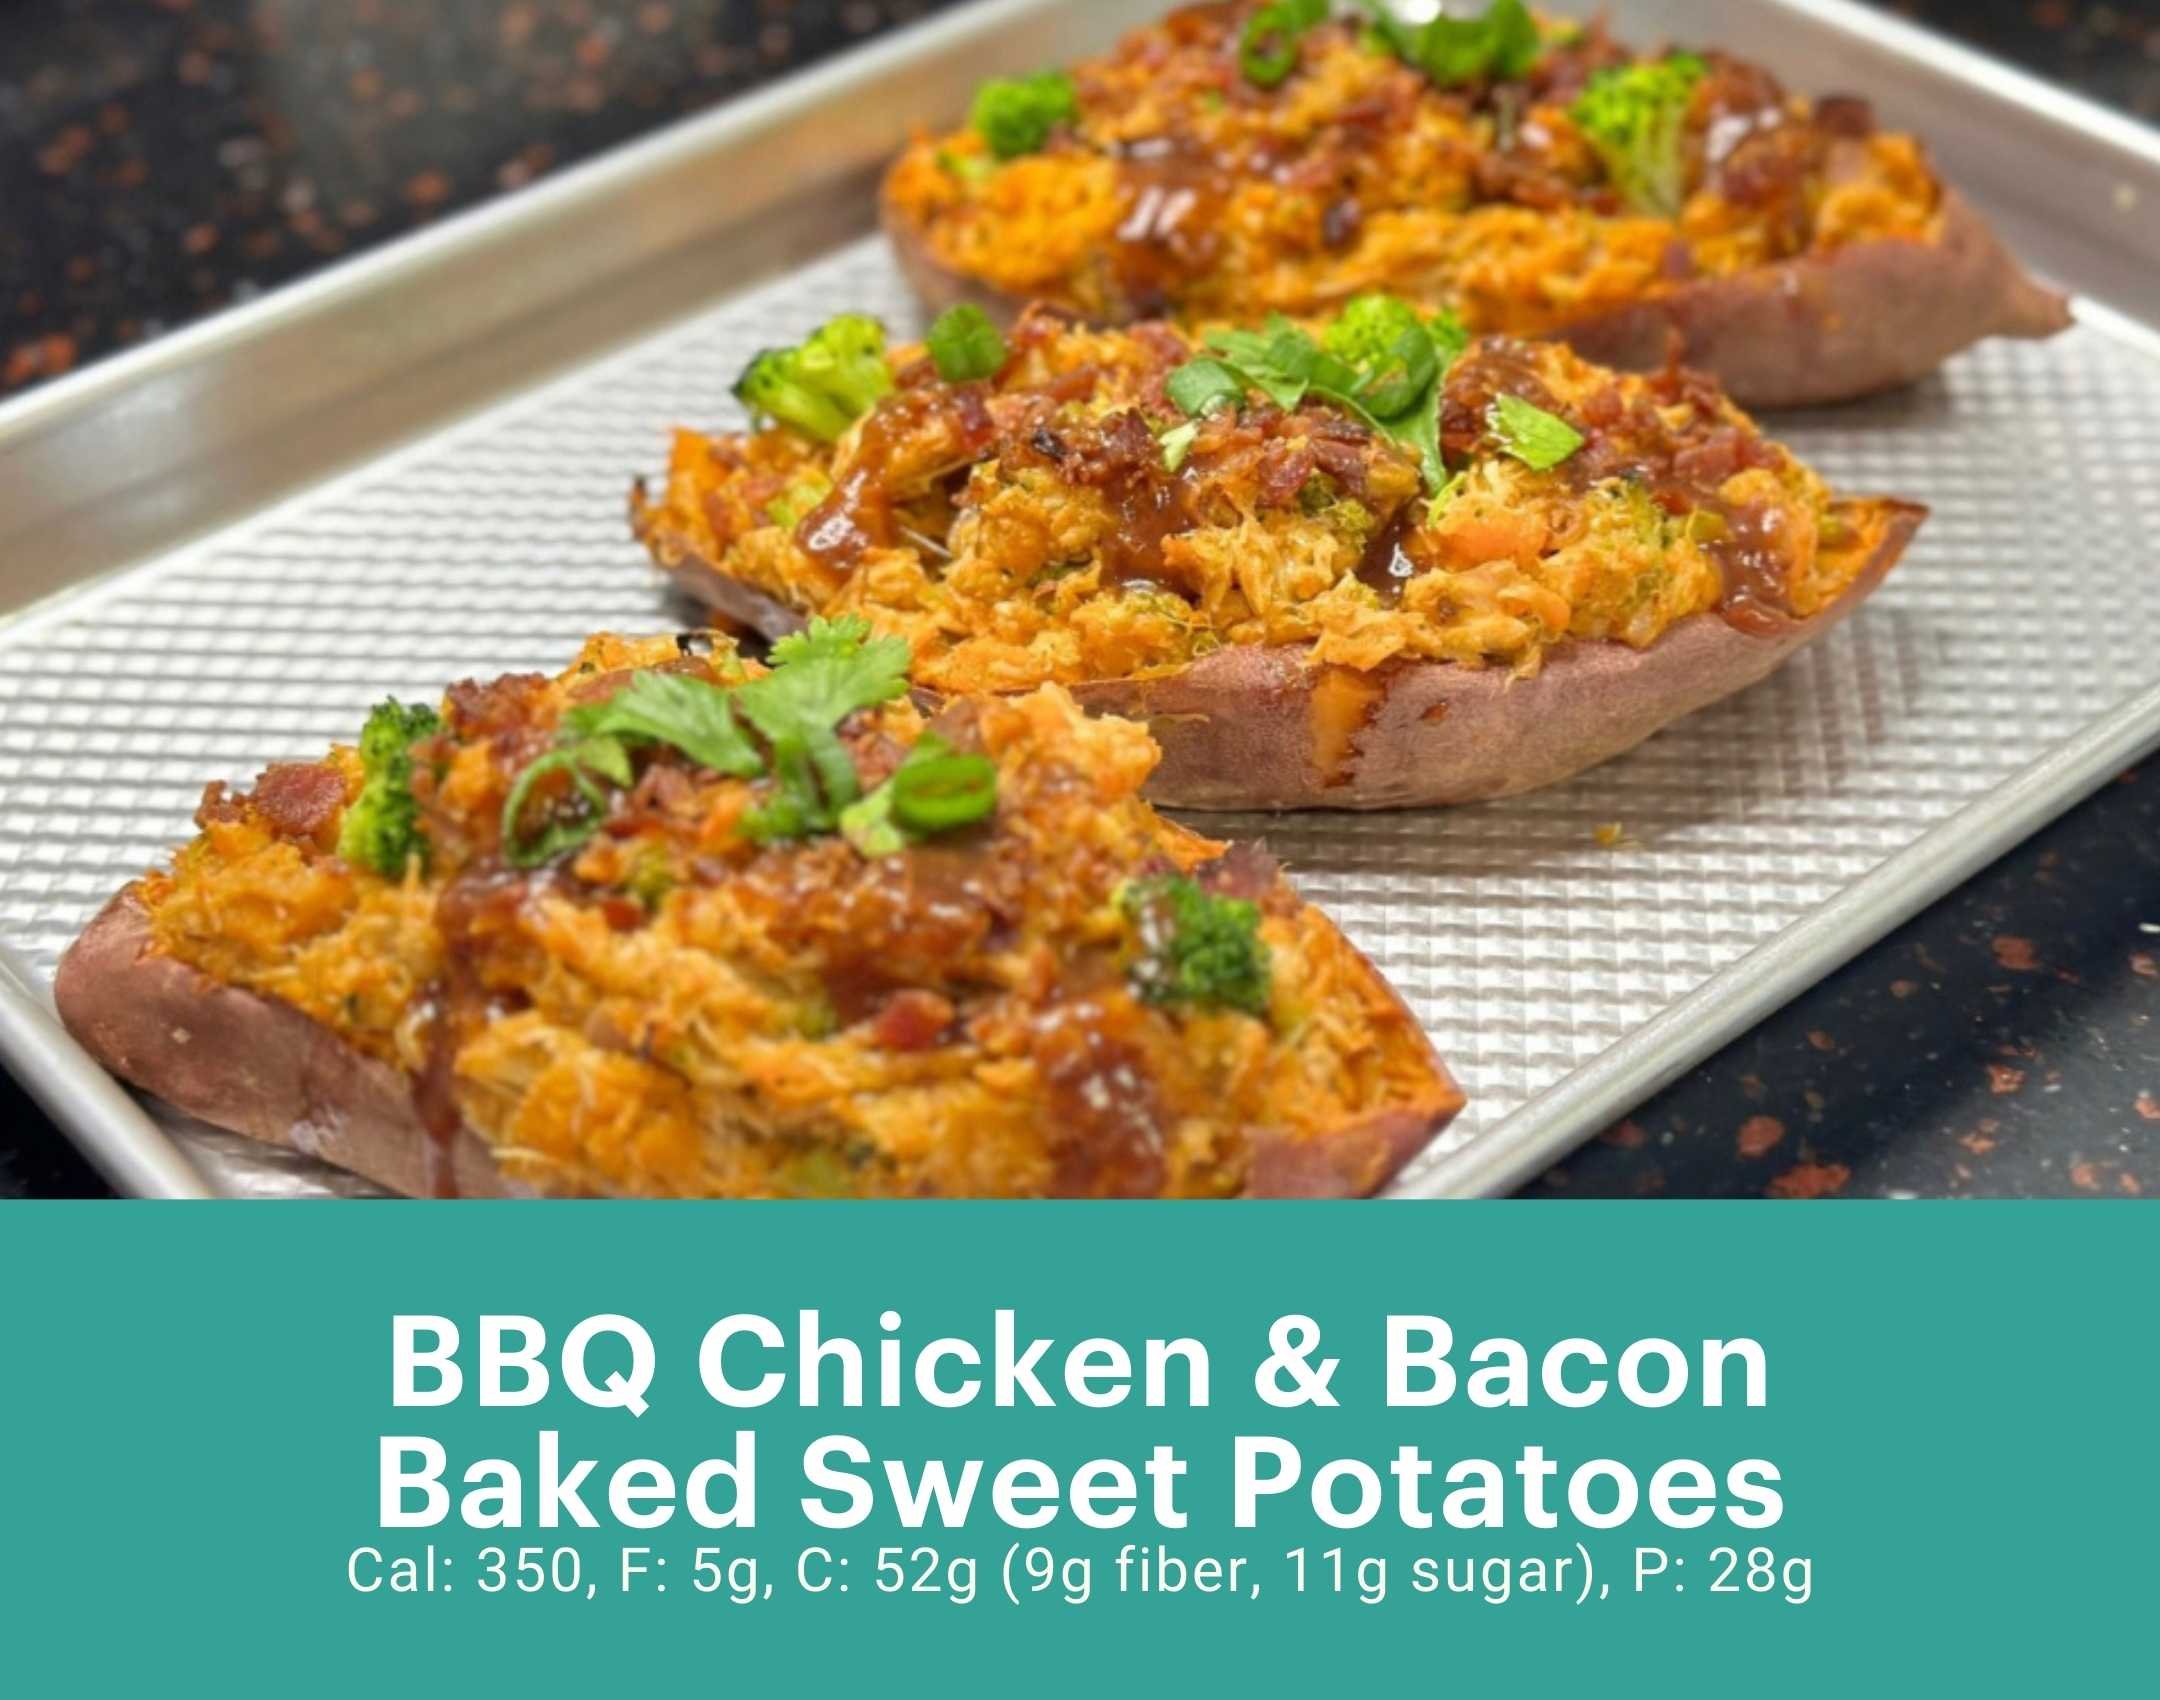 BBQ Chicken & Bacon Baked Sweet Potatoes.jpg